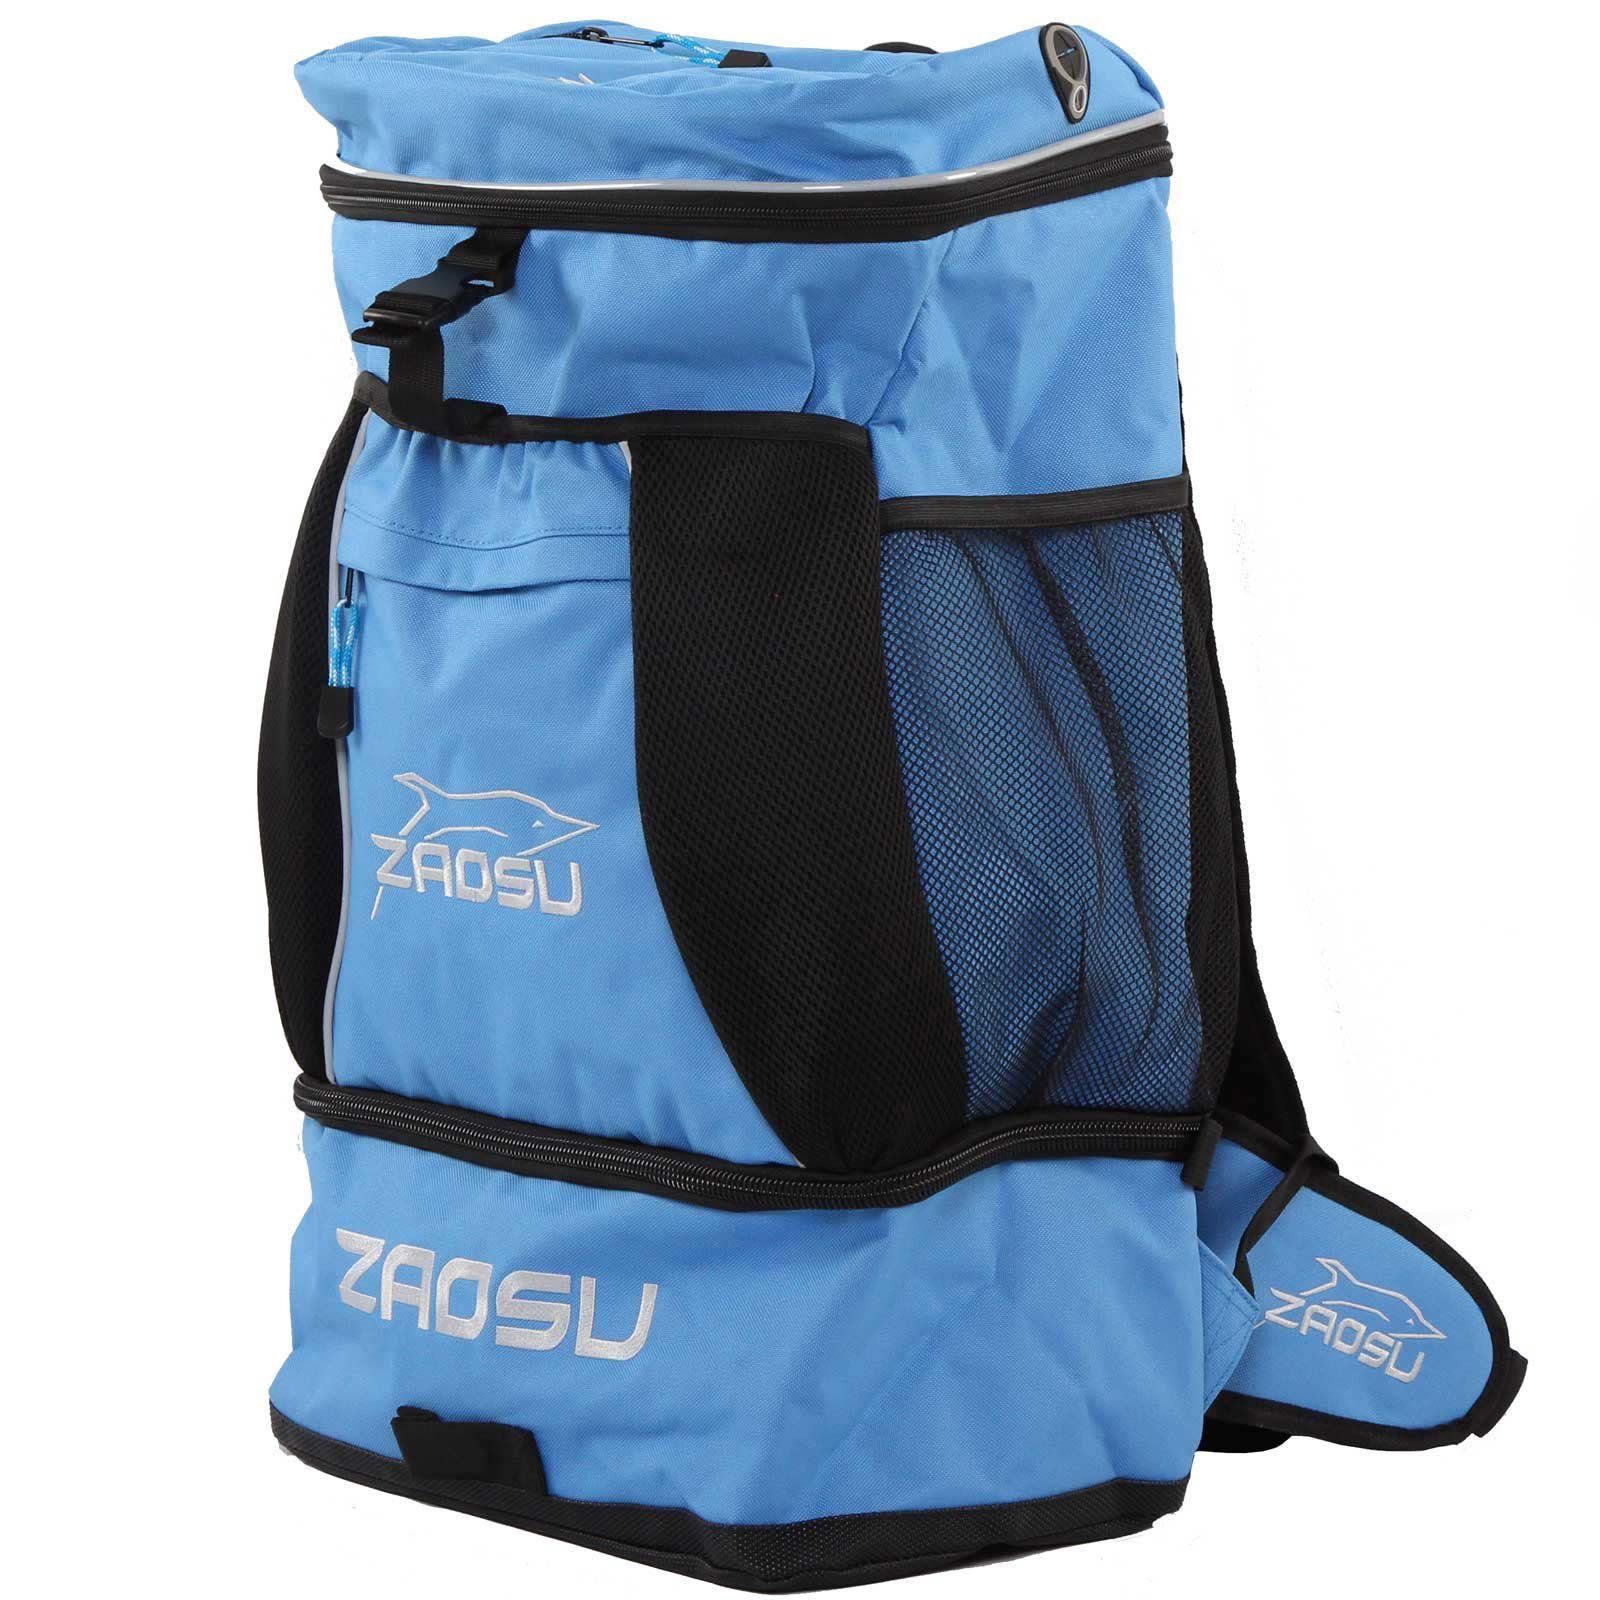 Transition Bag neonblau Sportrucksack ZAOSU